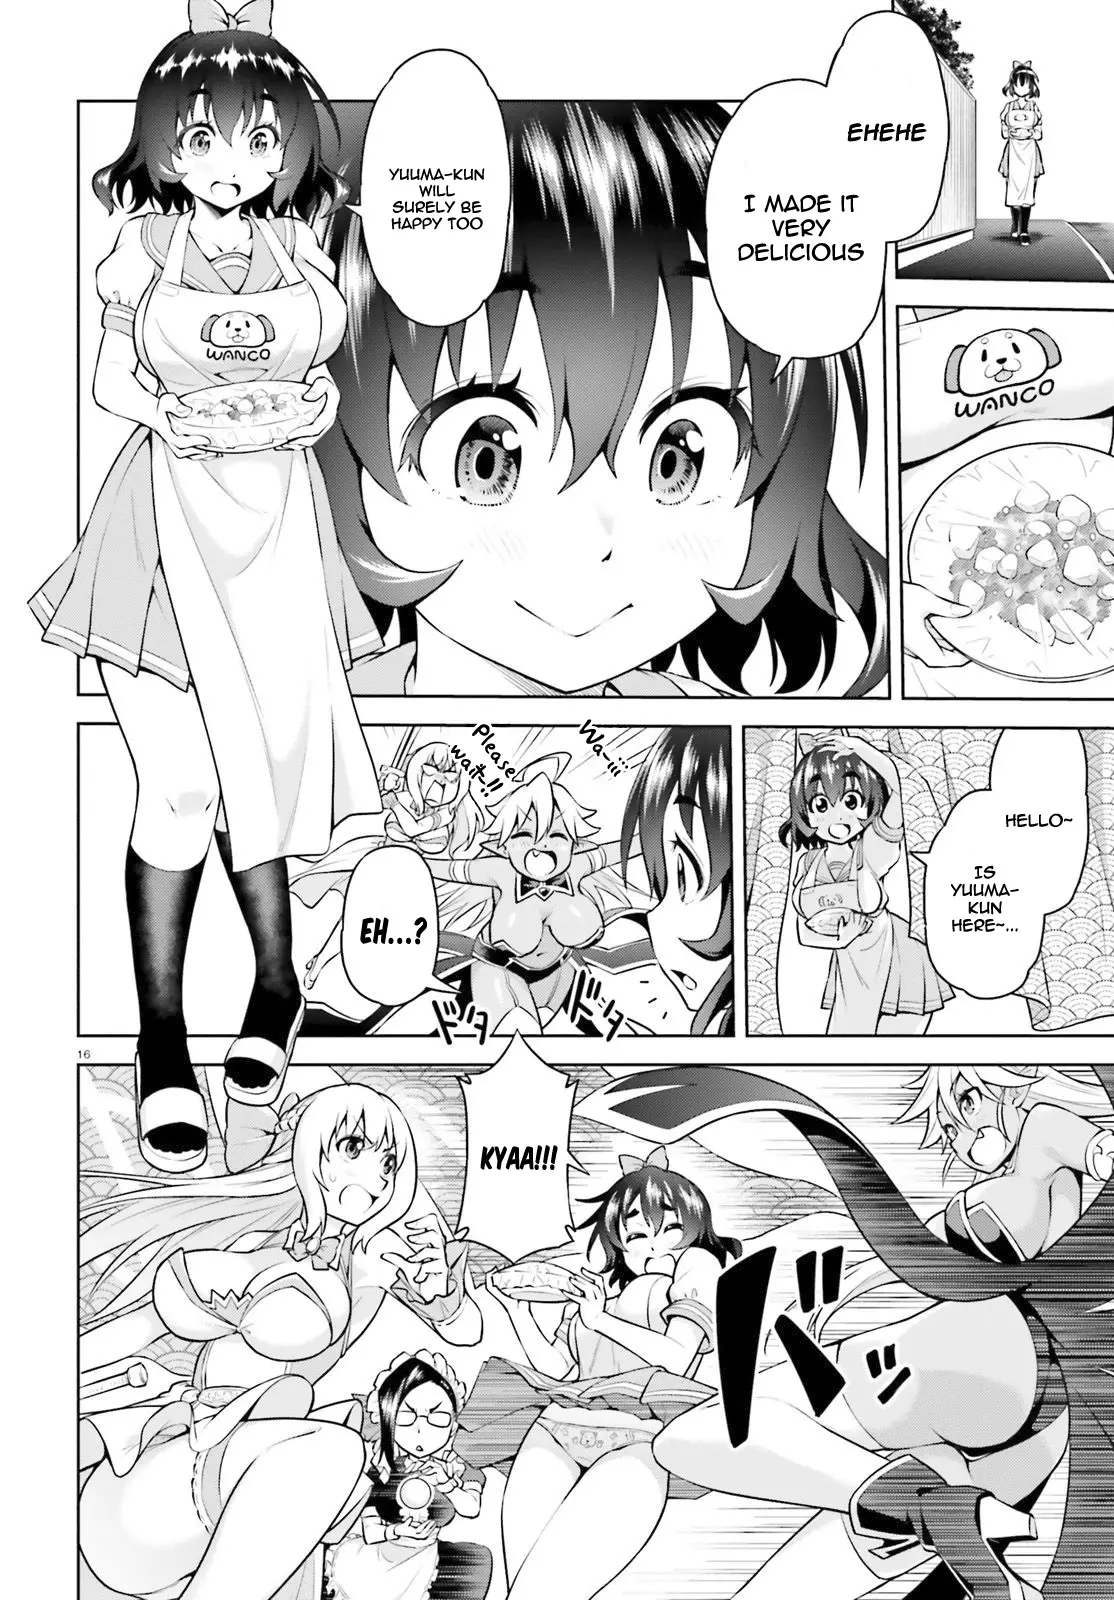 Yuragisou No Yuuna-san (Uncensored) (Manga) en VF